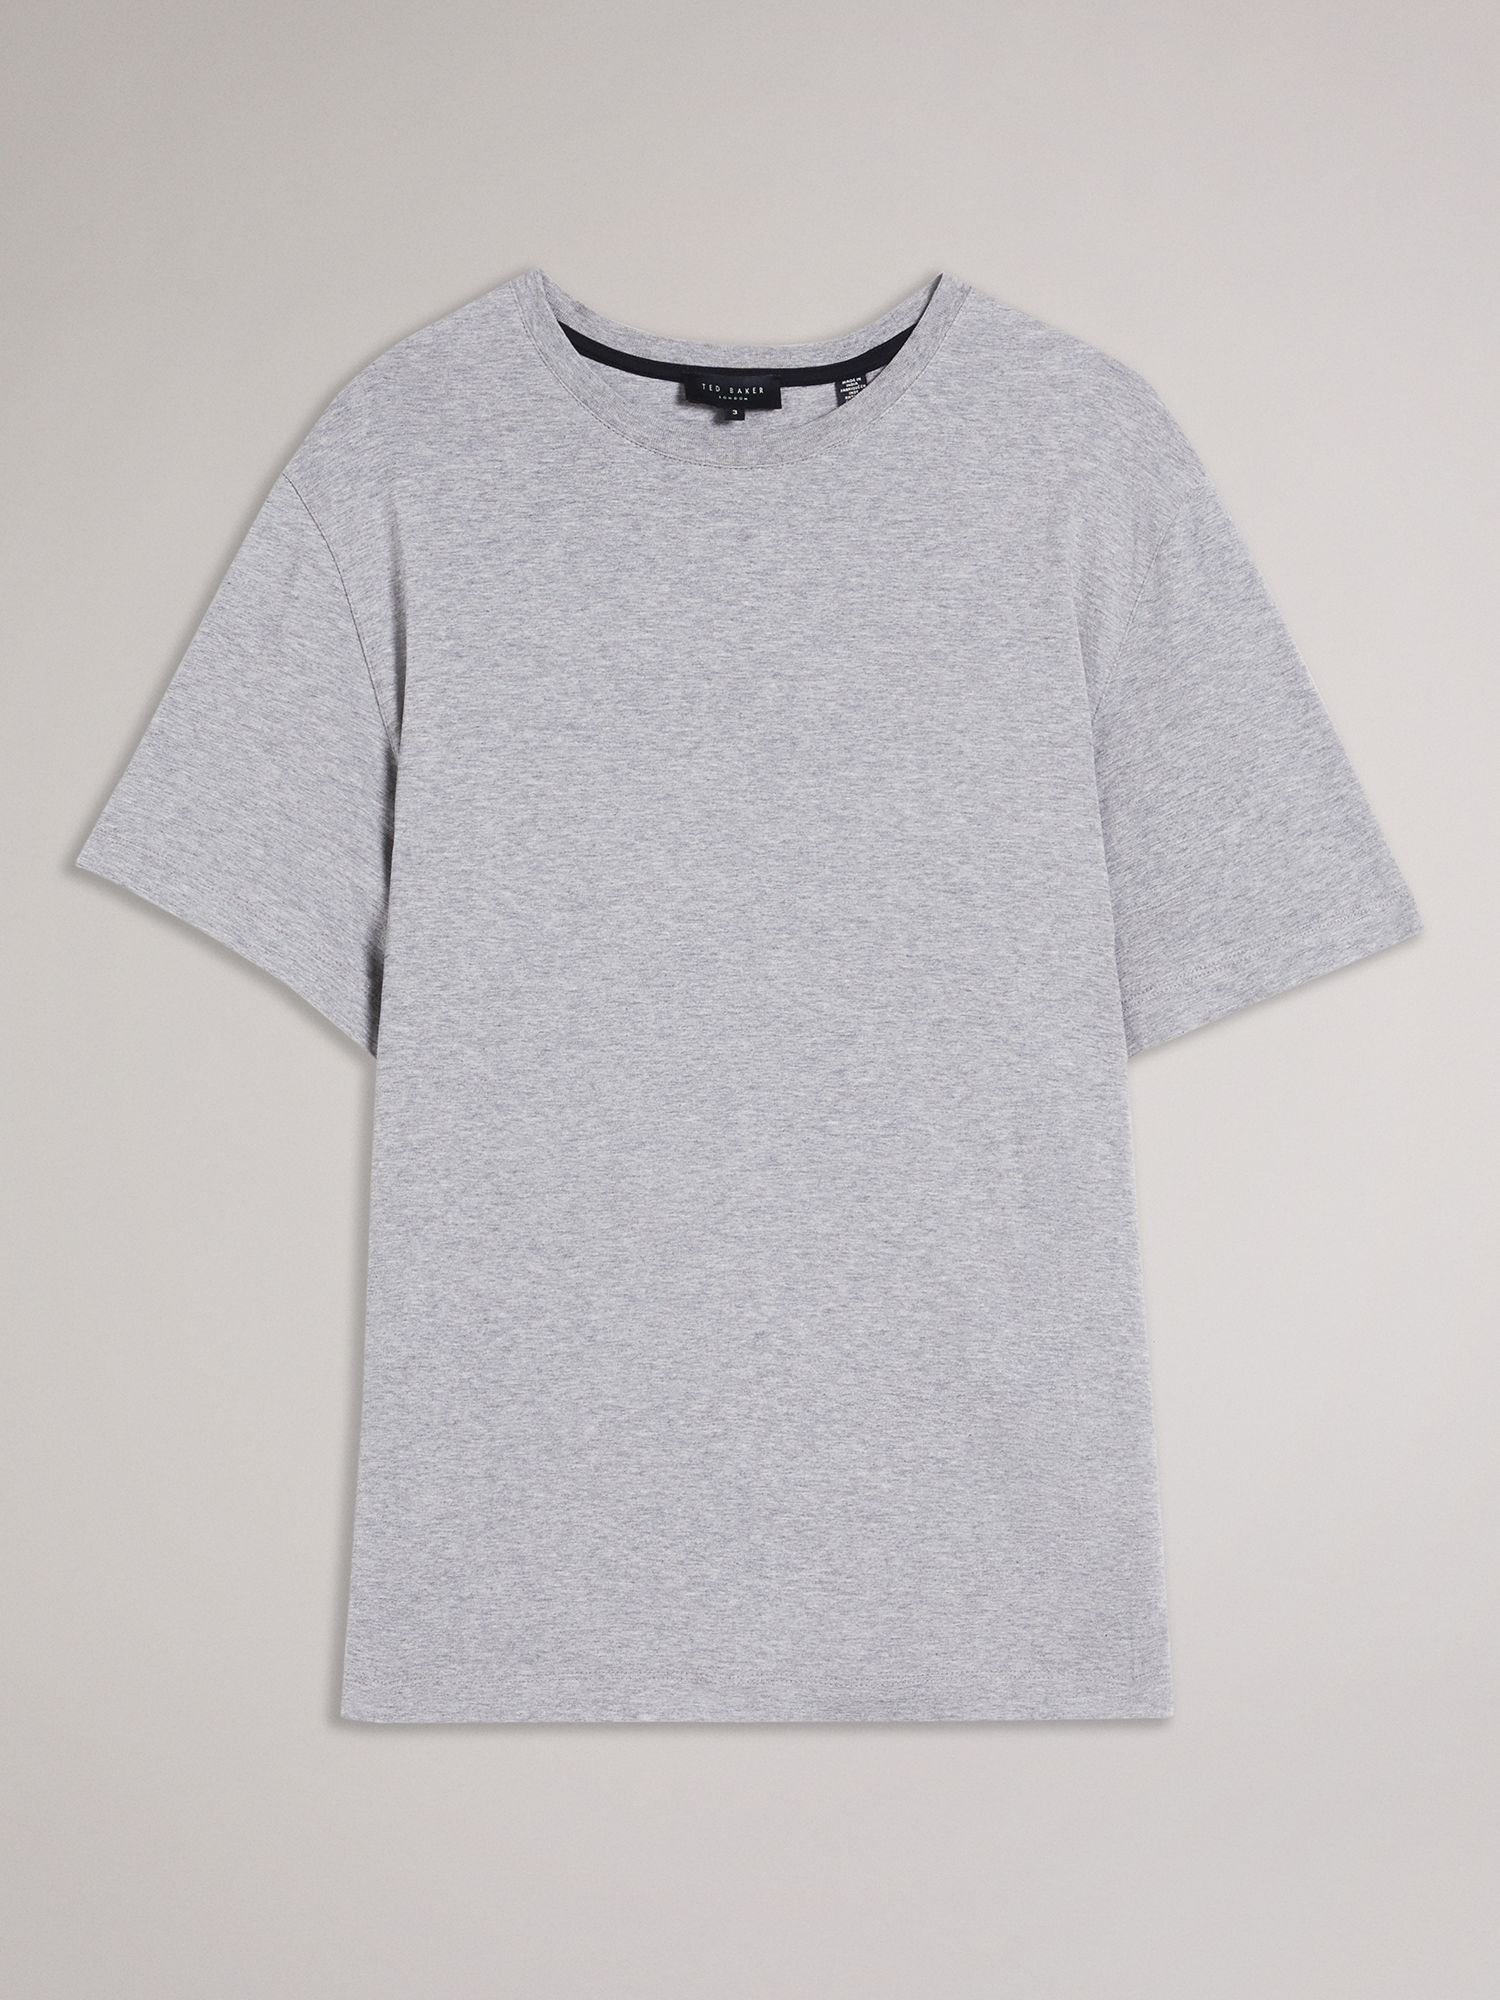 Ted Baker Tywinn Cotton T-Shirt, Grey Marl Grey, XS